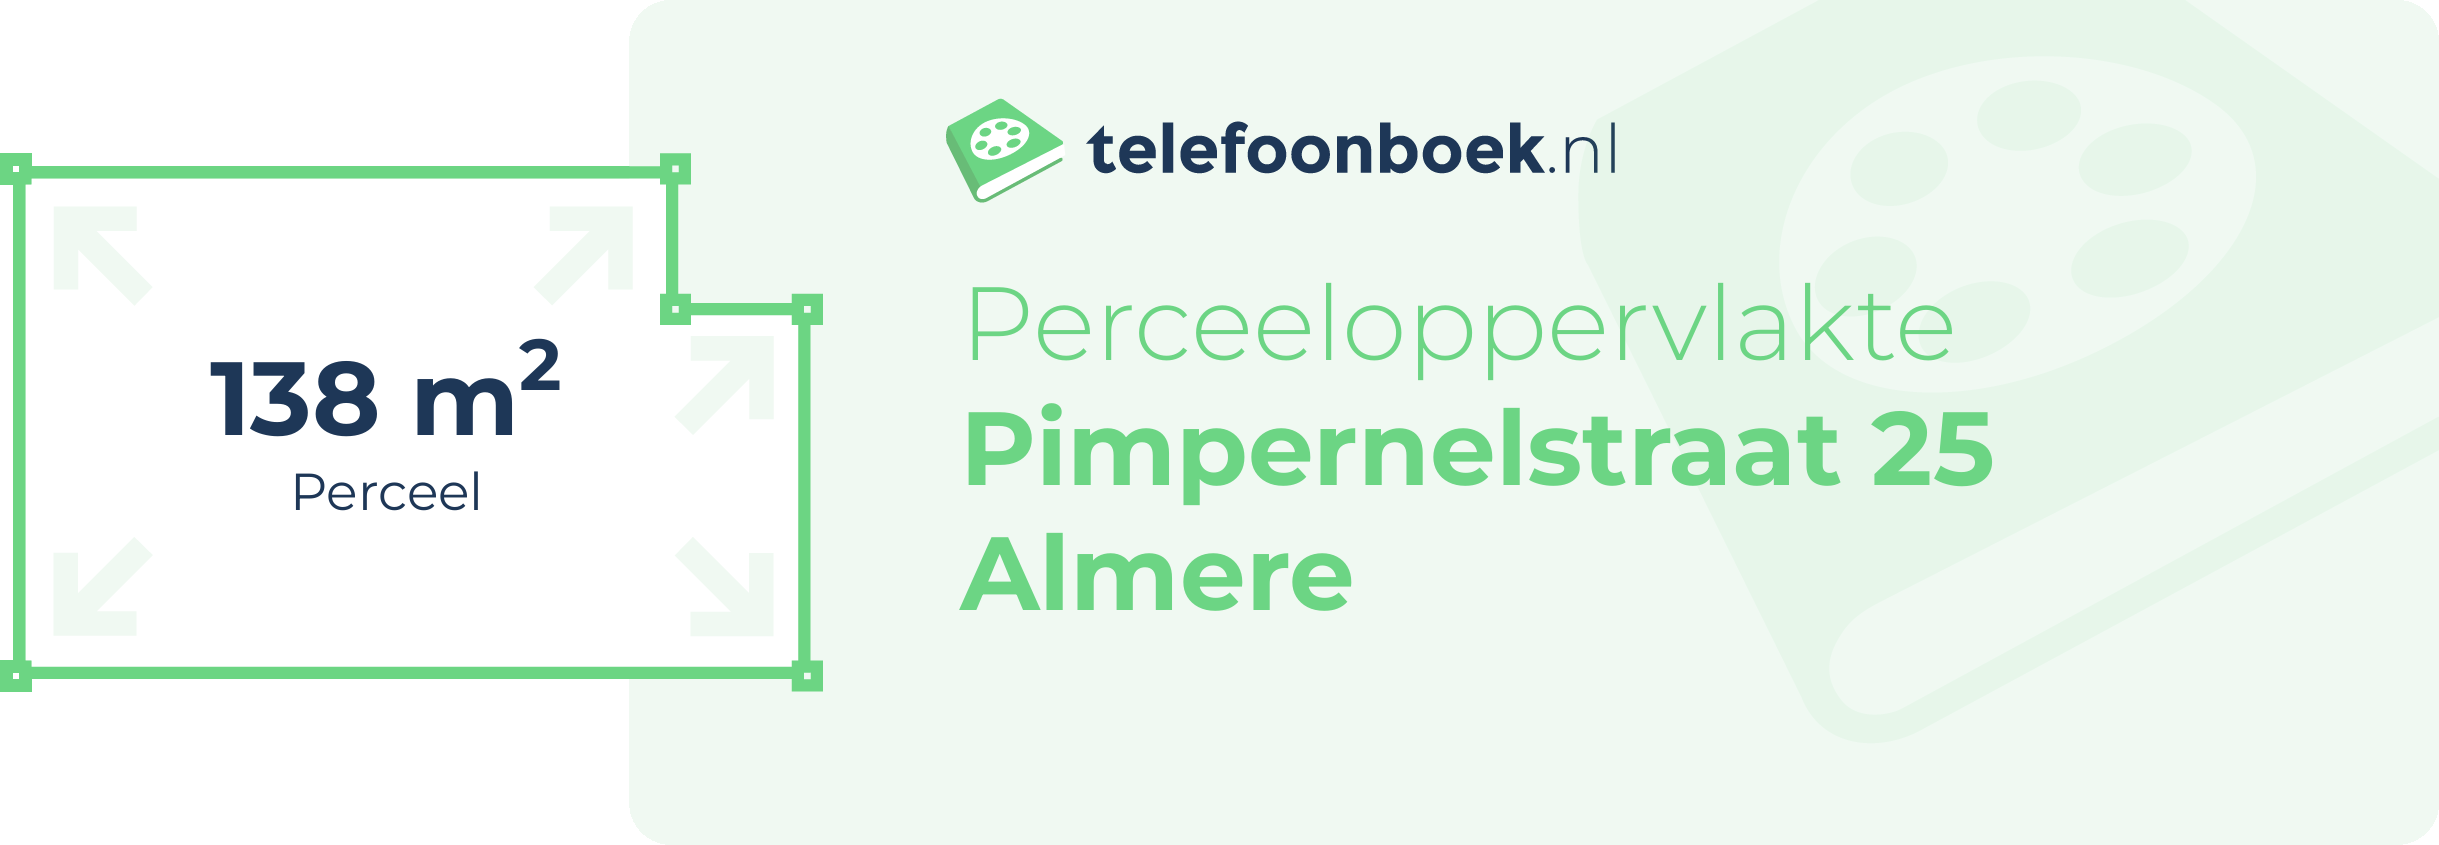 Perceeloppervlakte Pimpernelstraat 25 Almere